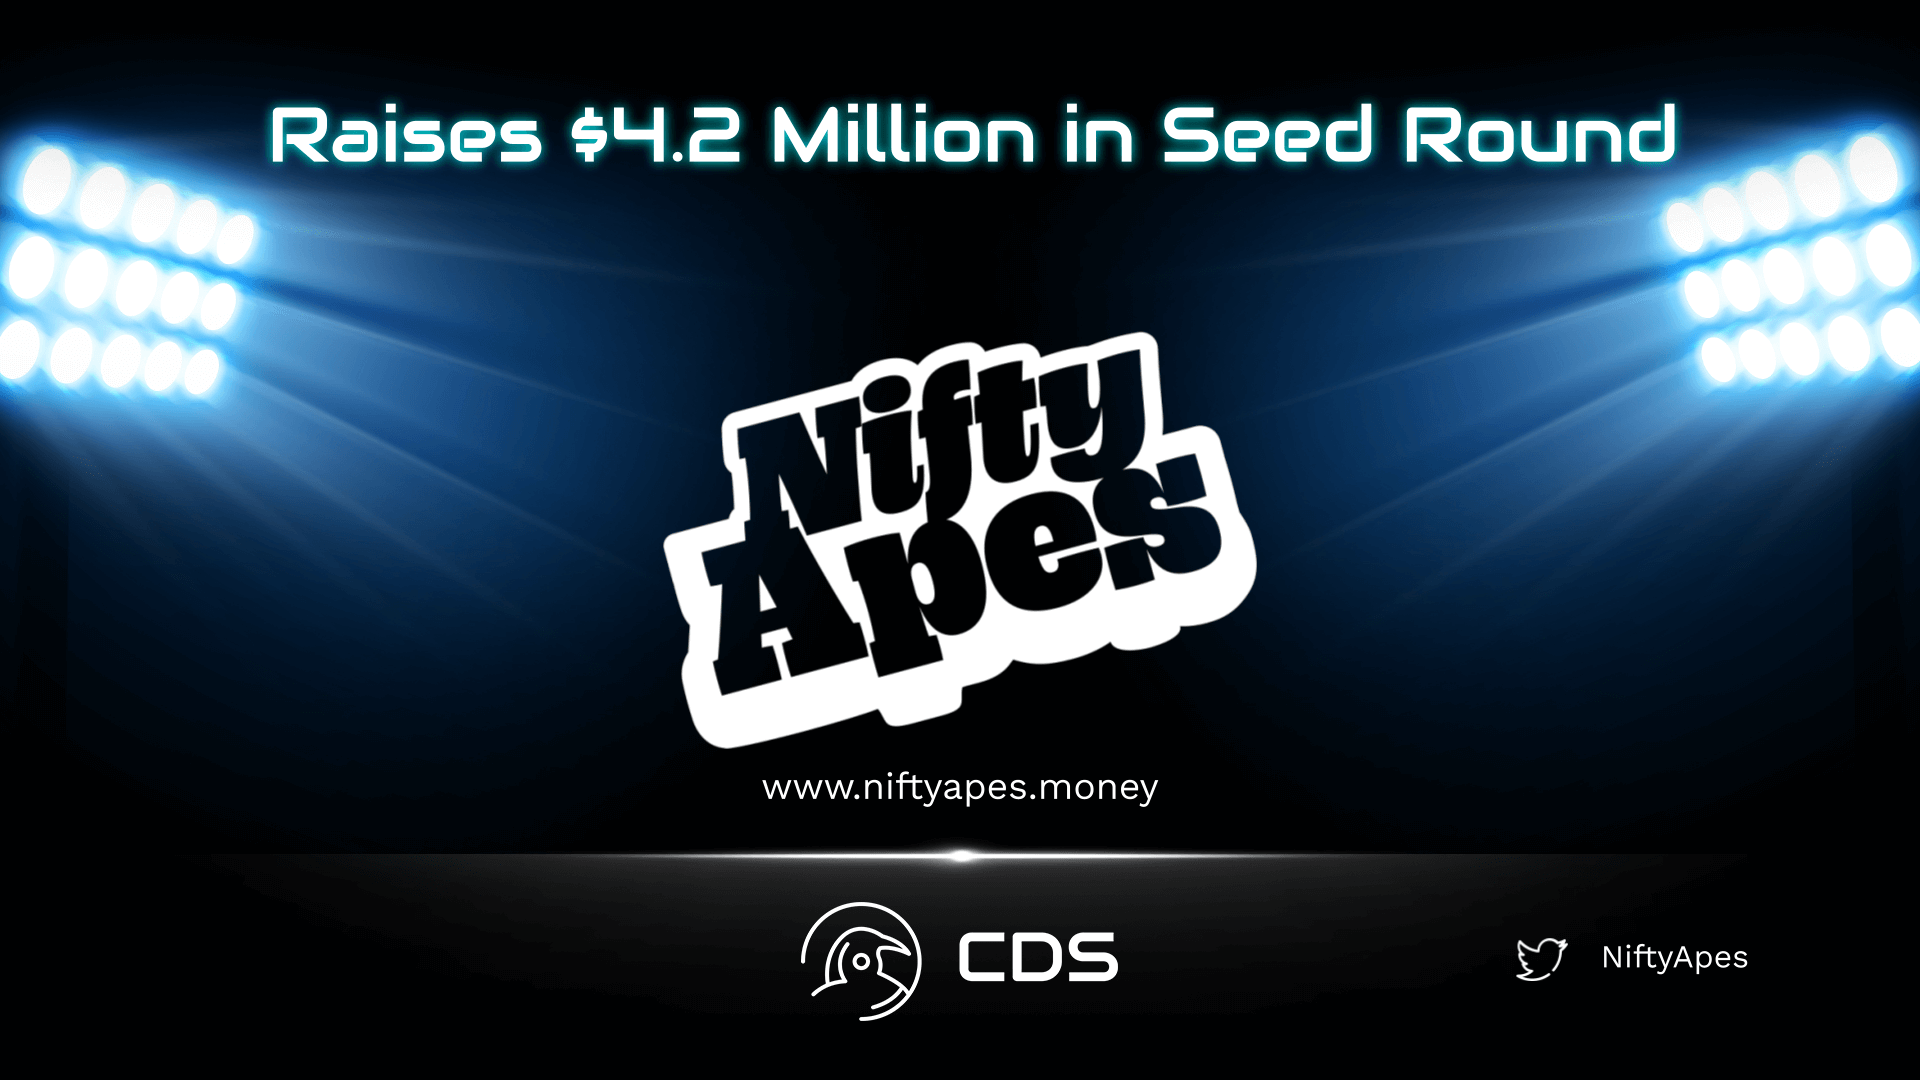 niftyapes raises $4.2 million